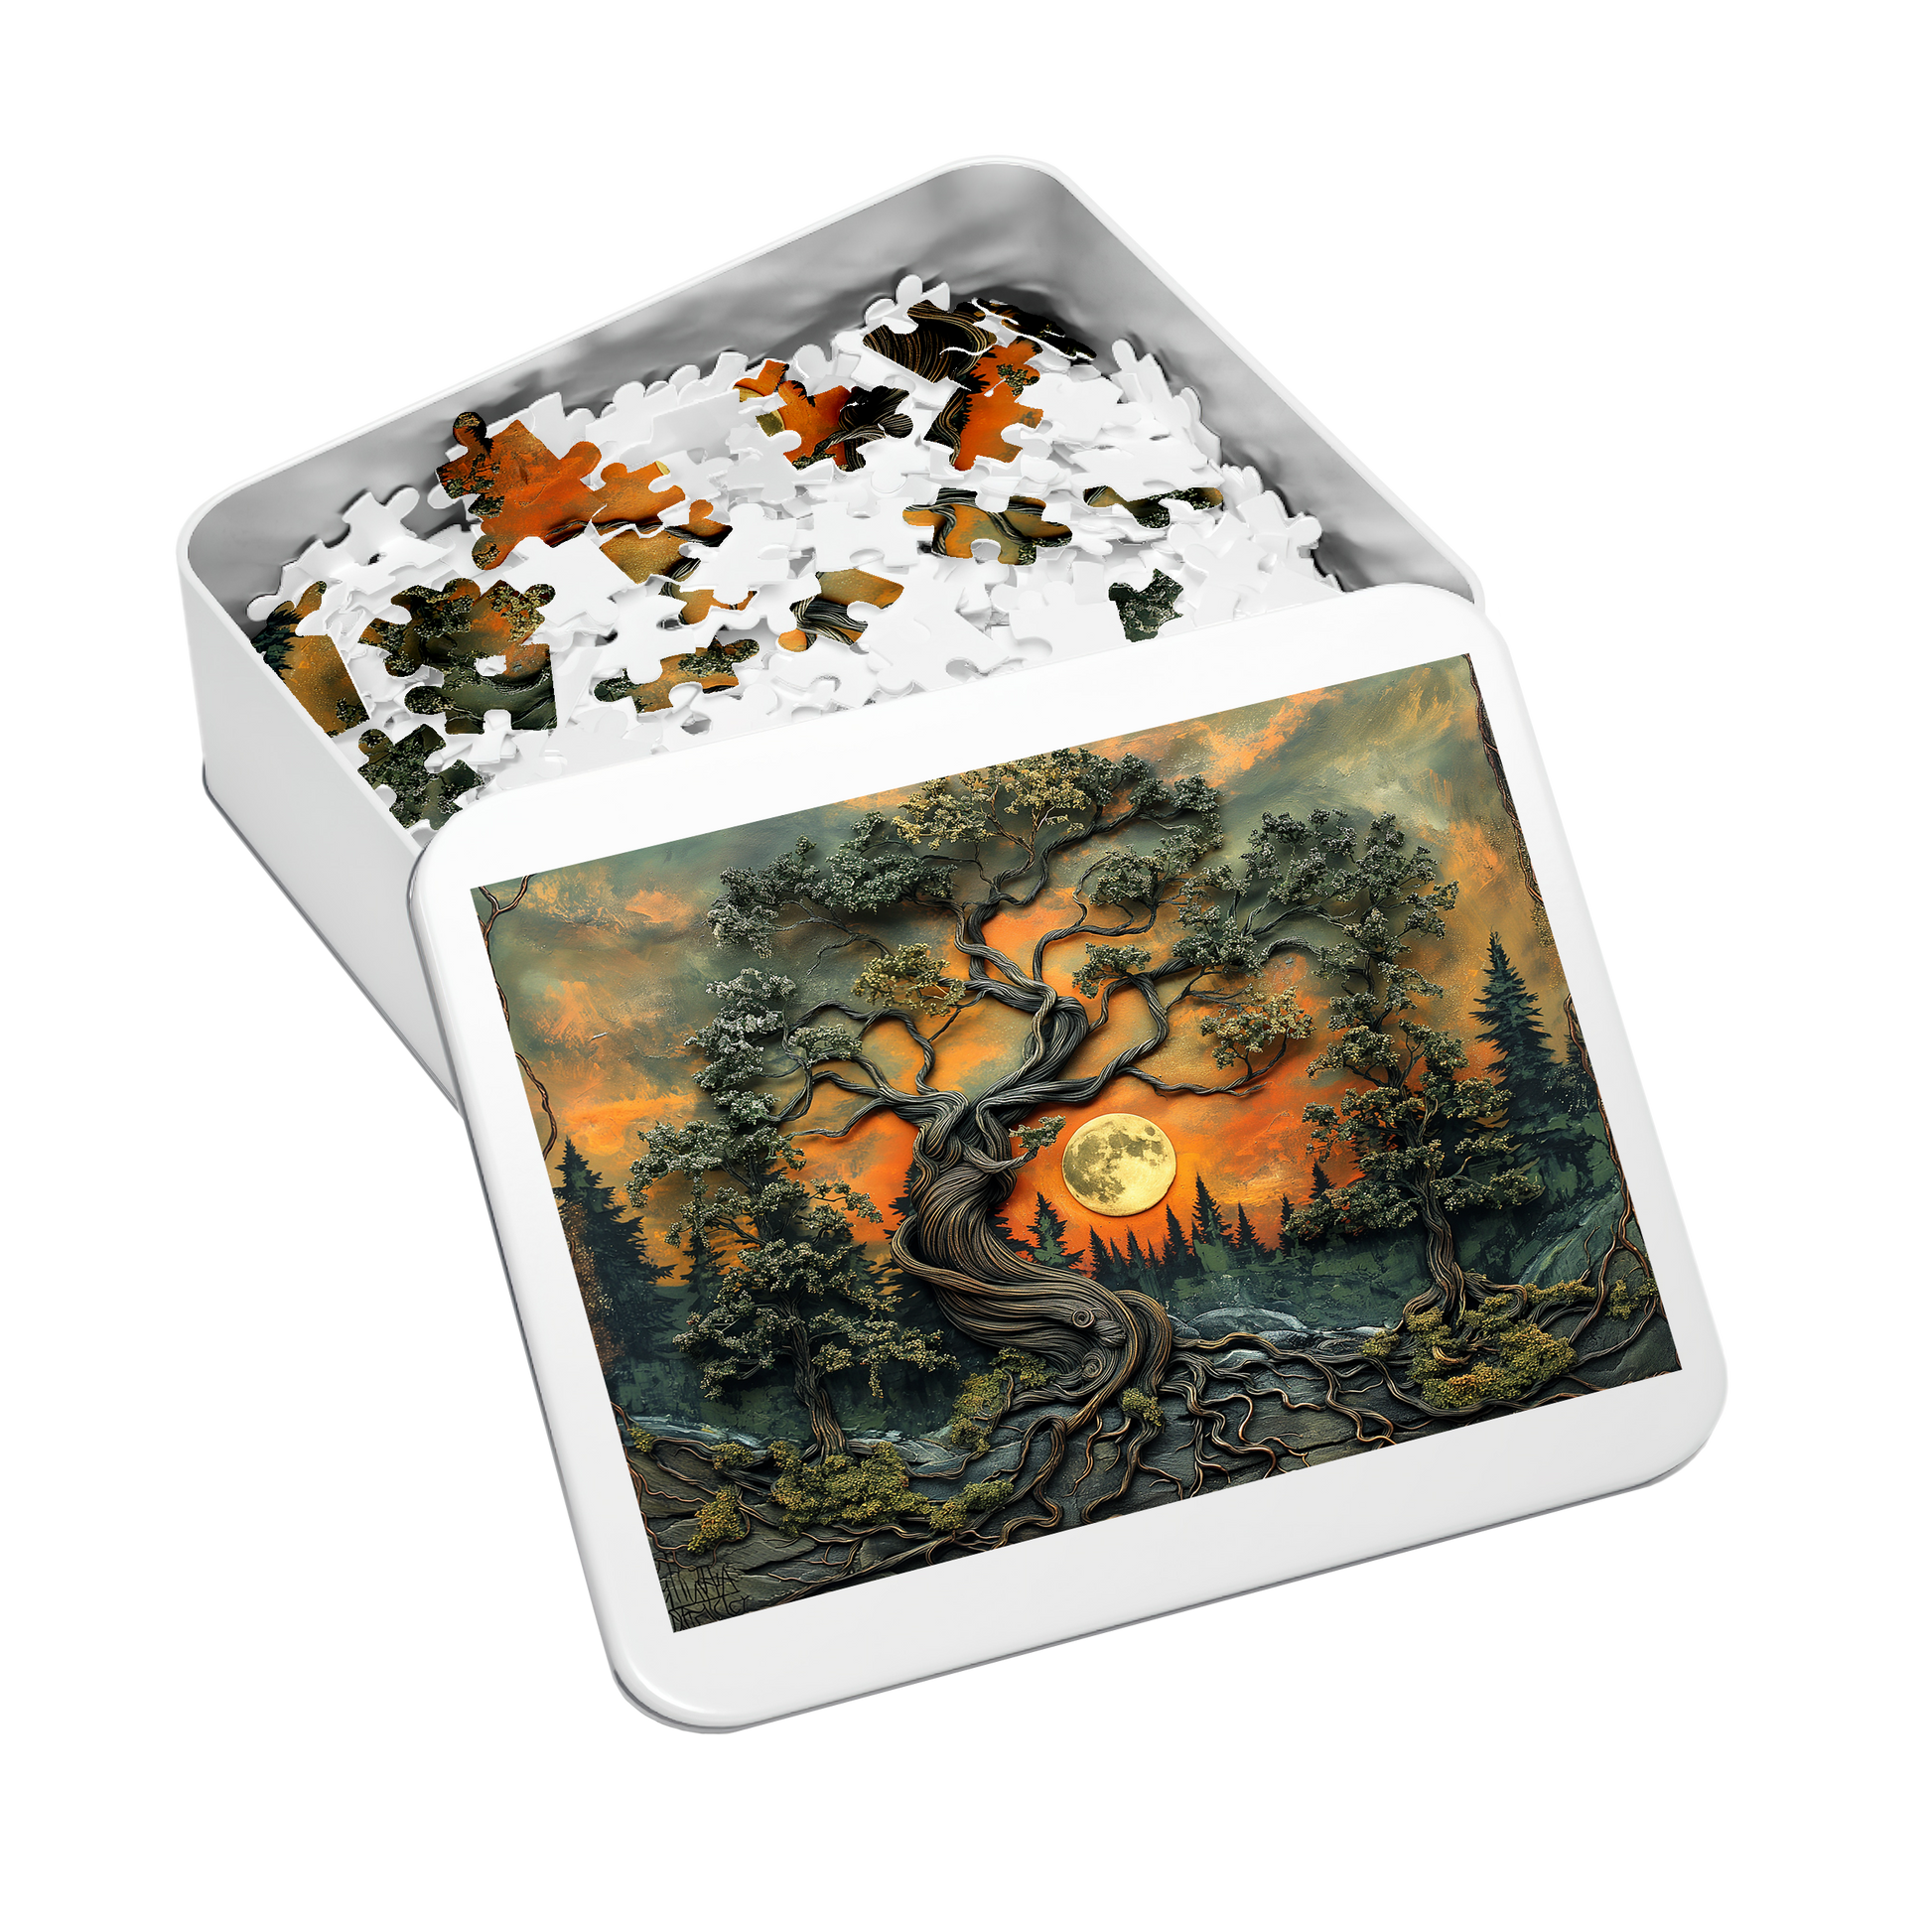 World Tree 01 - Premium Jigsaw Puzzle, Ornate, Fantasy - Multiple Sizes Available